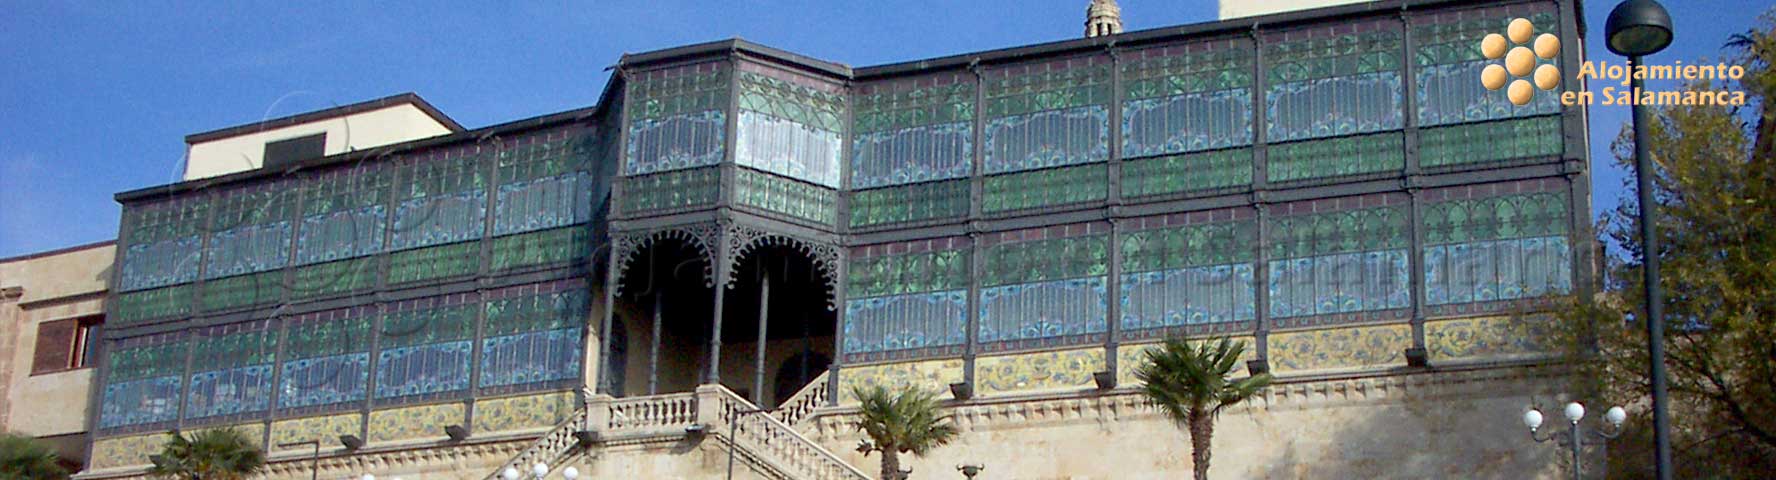 Casa Lis. Muesto de Art Nouveau y Art Déco. Salamanca